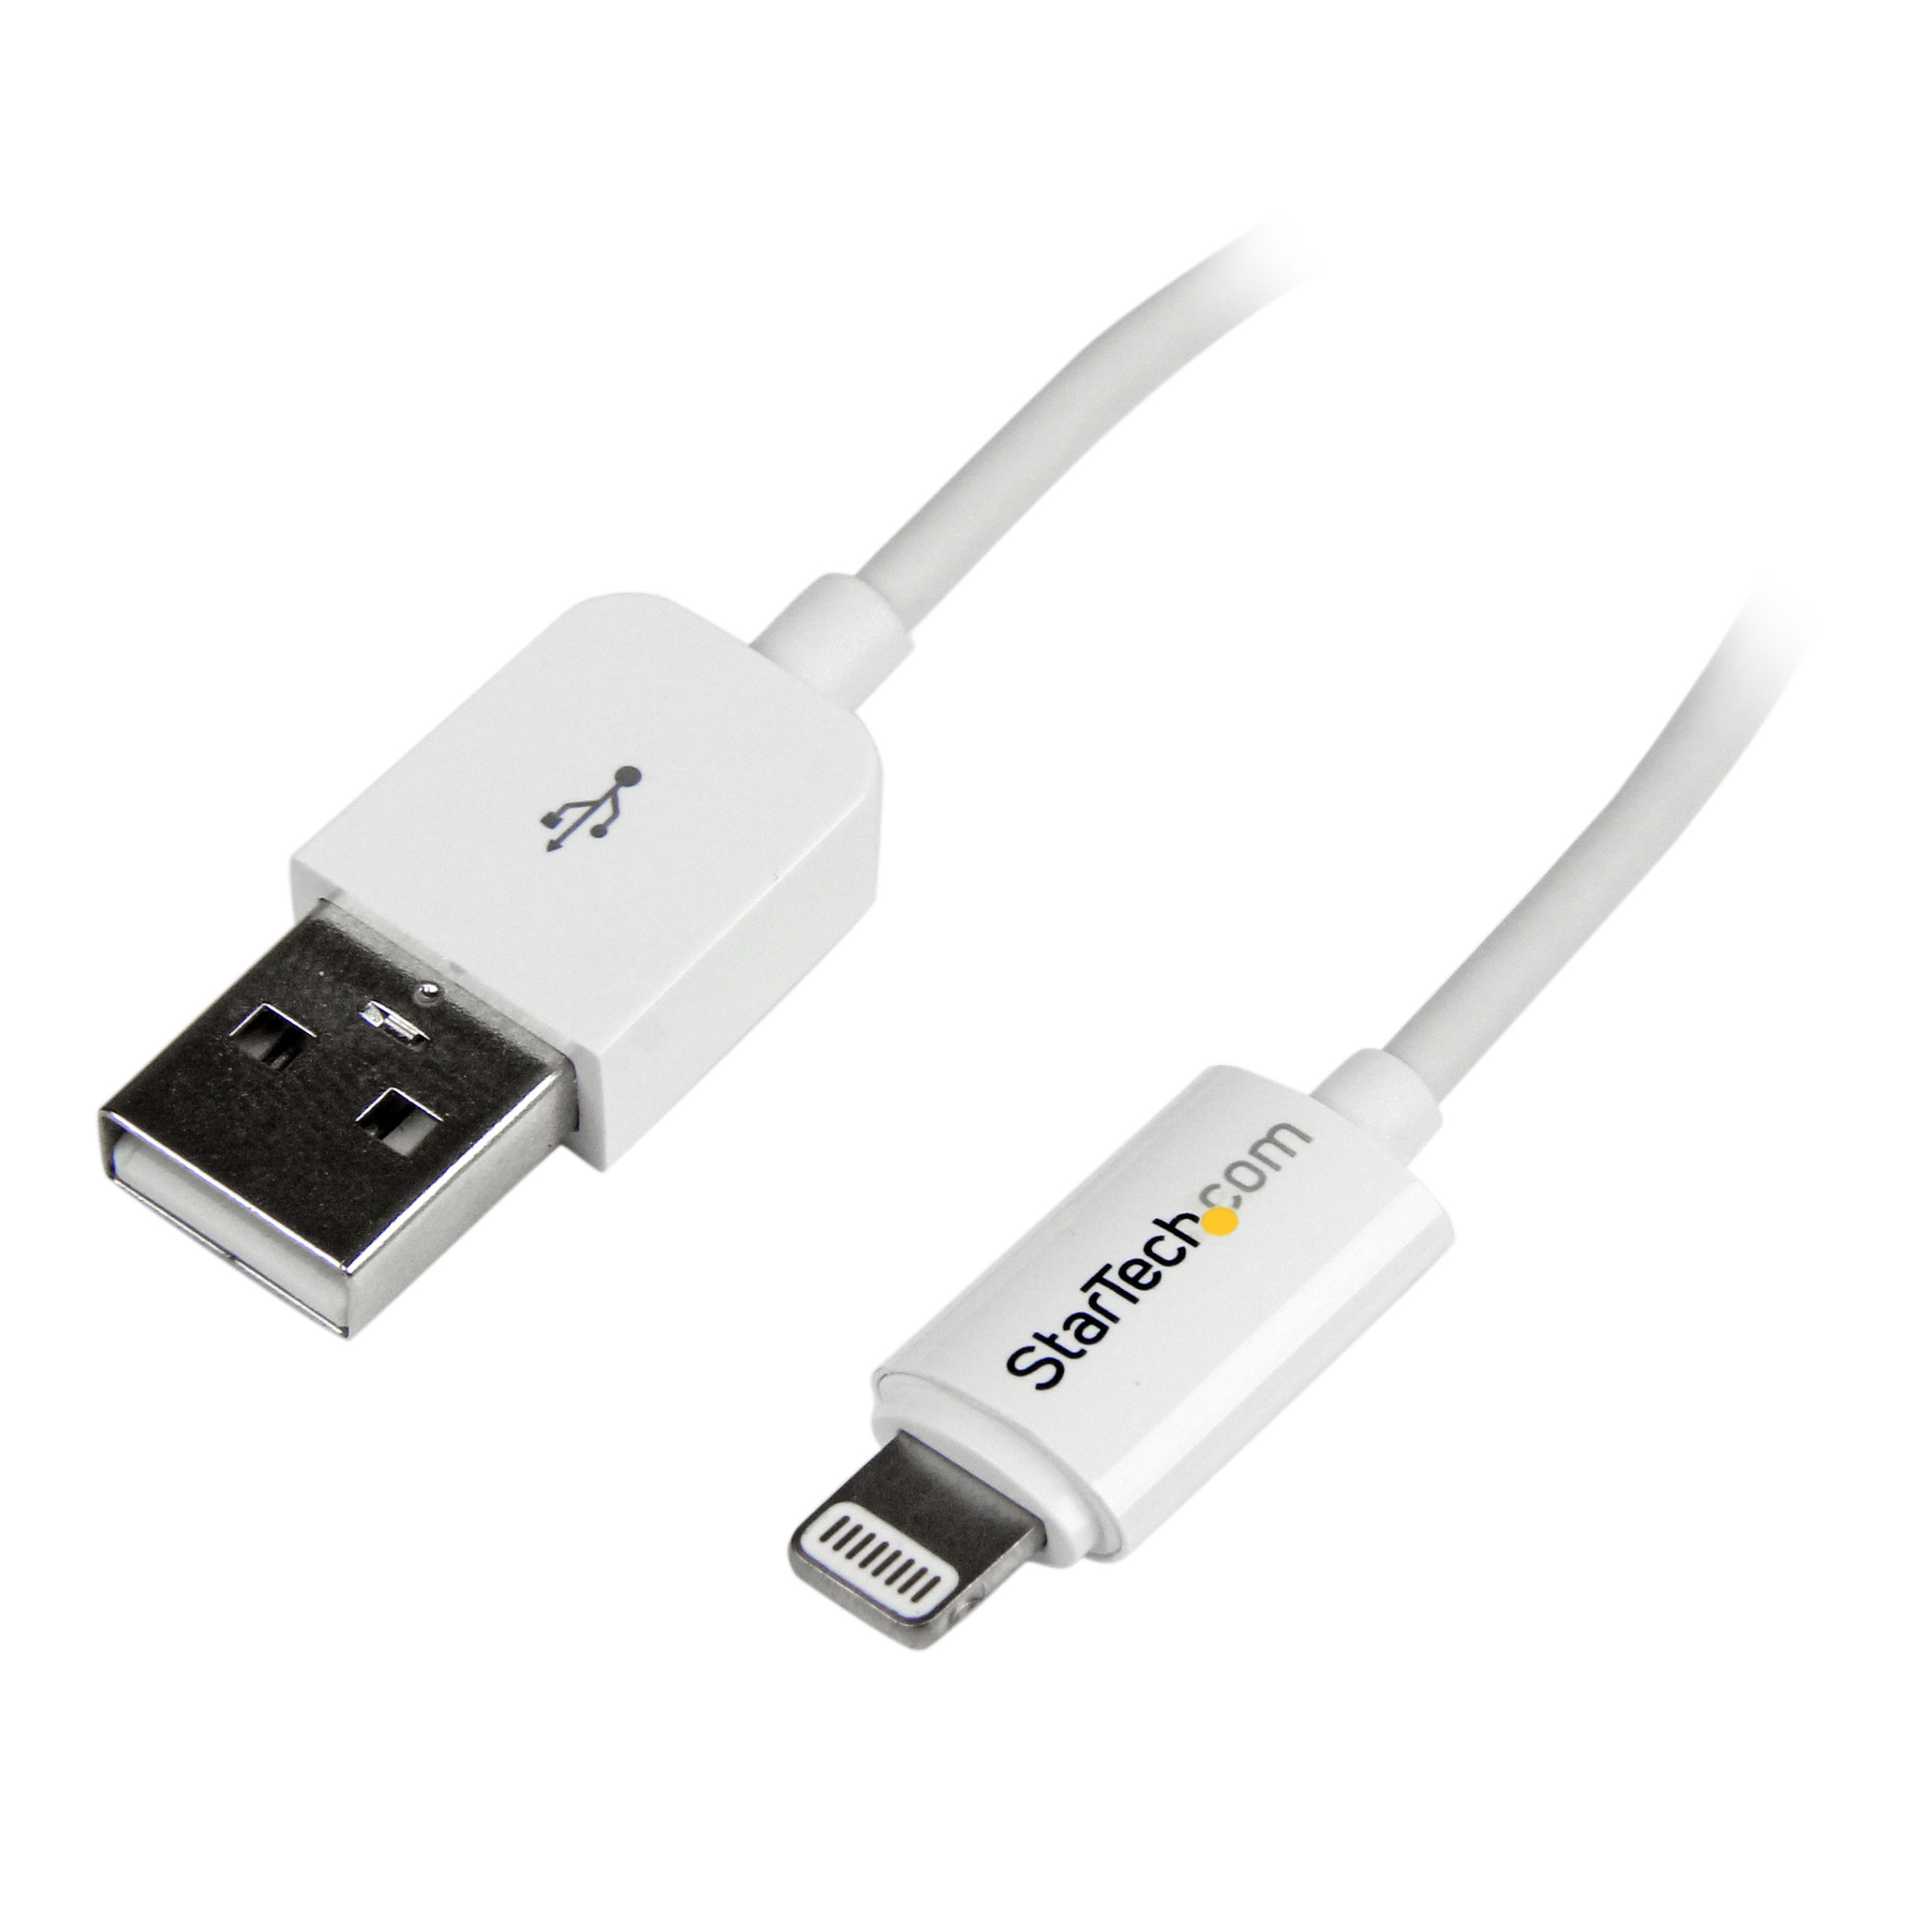 StarTech.com Câble Apple® Lightning vers USB pour iPhone, iPod, iPad 2 m  Blanc - Câble iPhone 5 - Chargeur Synchronisation Lightning - 2m - câble  Lightning - Lightning / USB - 6.6 ft